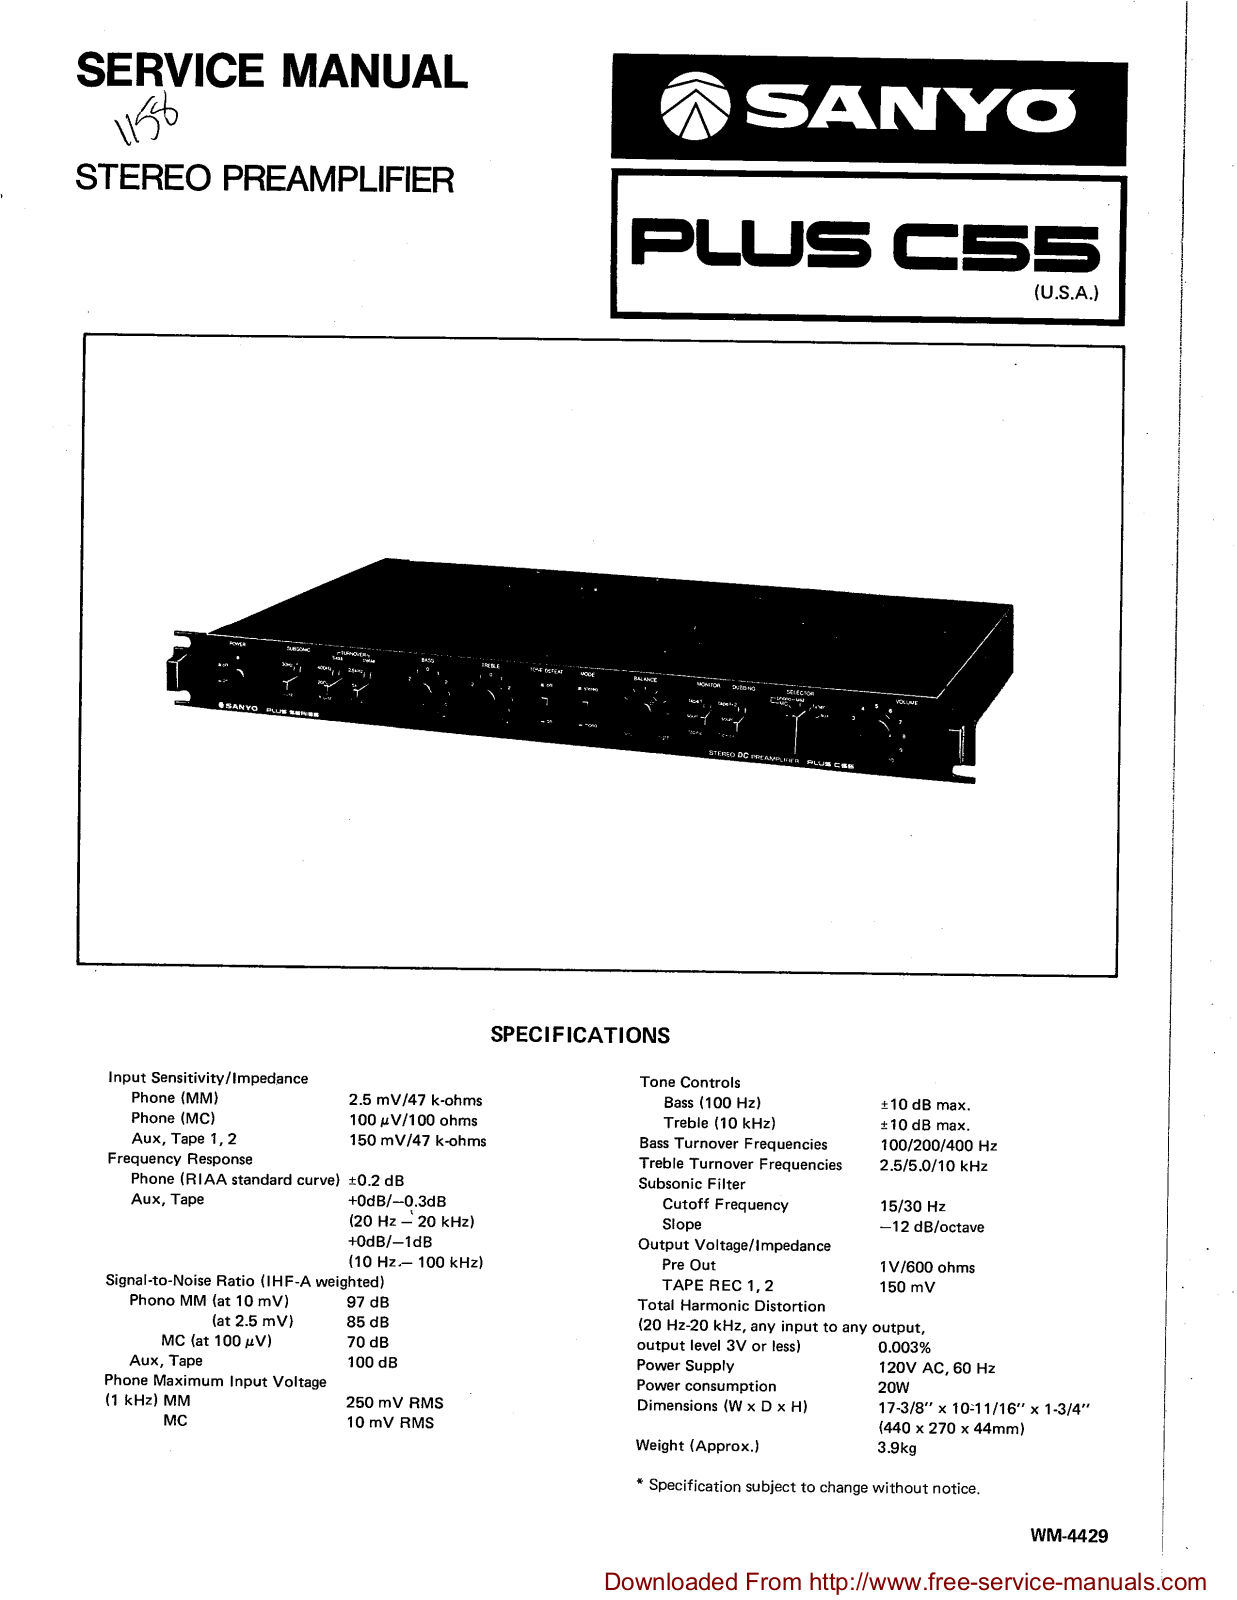 Sanyo PLUSC-55 Service manual